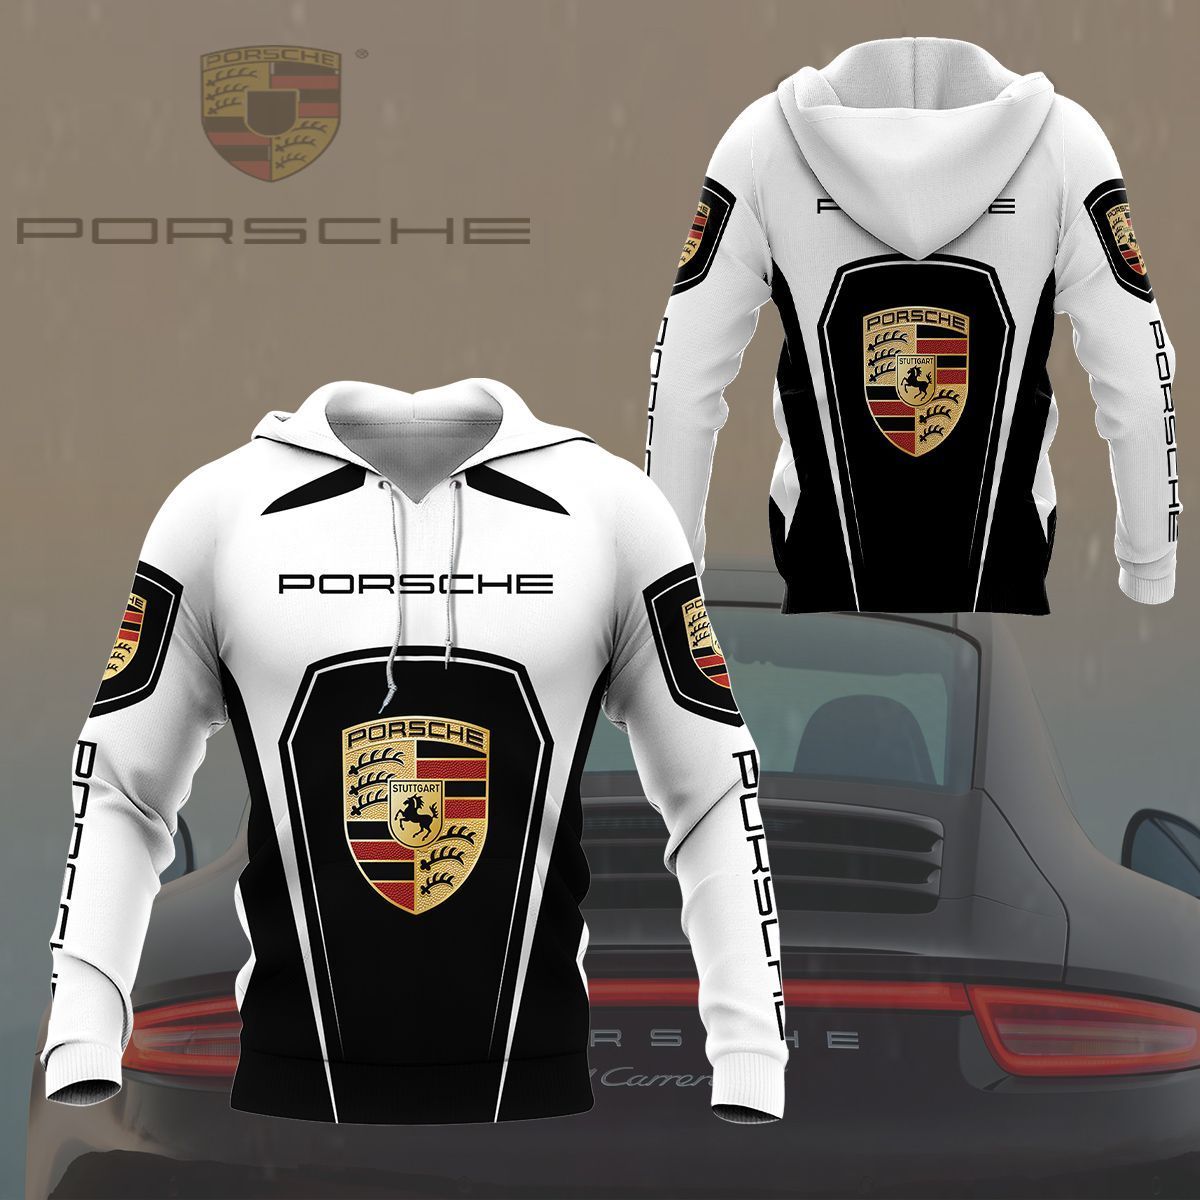 3D All Over Printed Porsche Shirts Ver 1 (Black) – Podoshirt